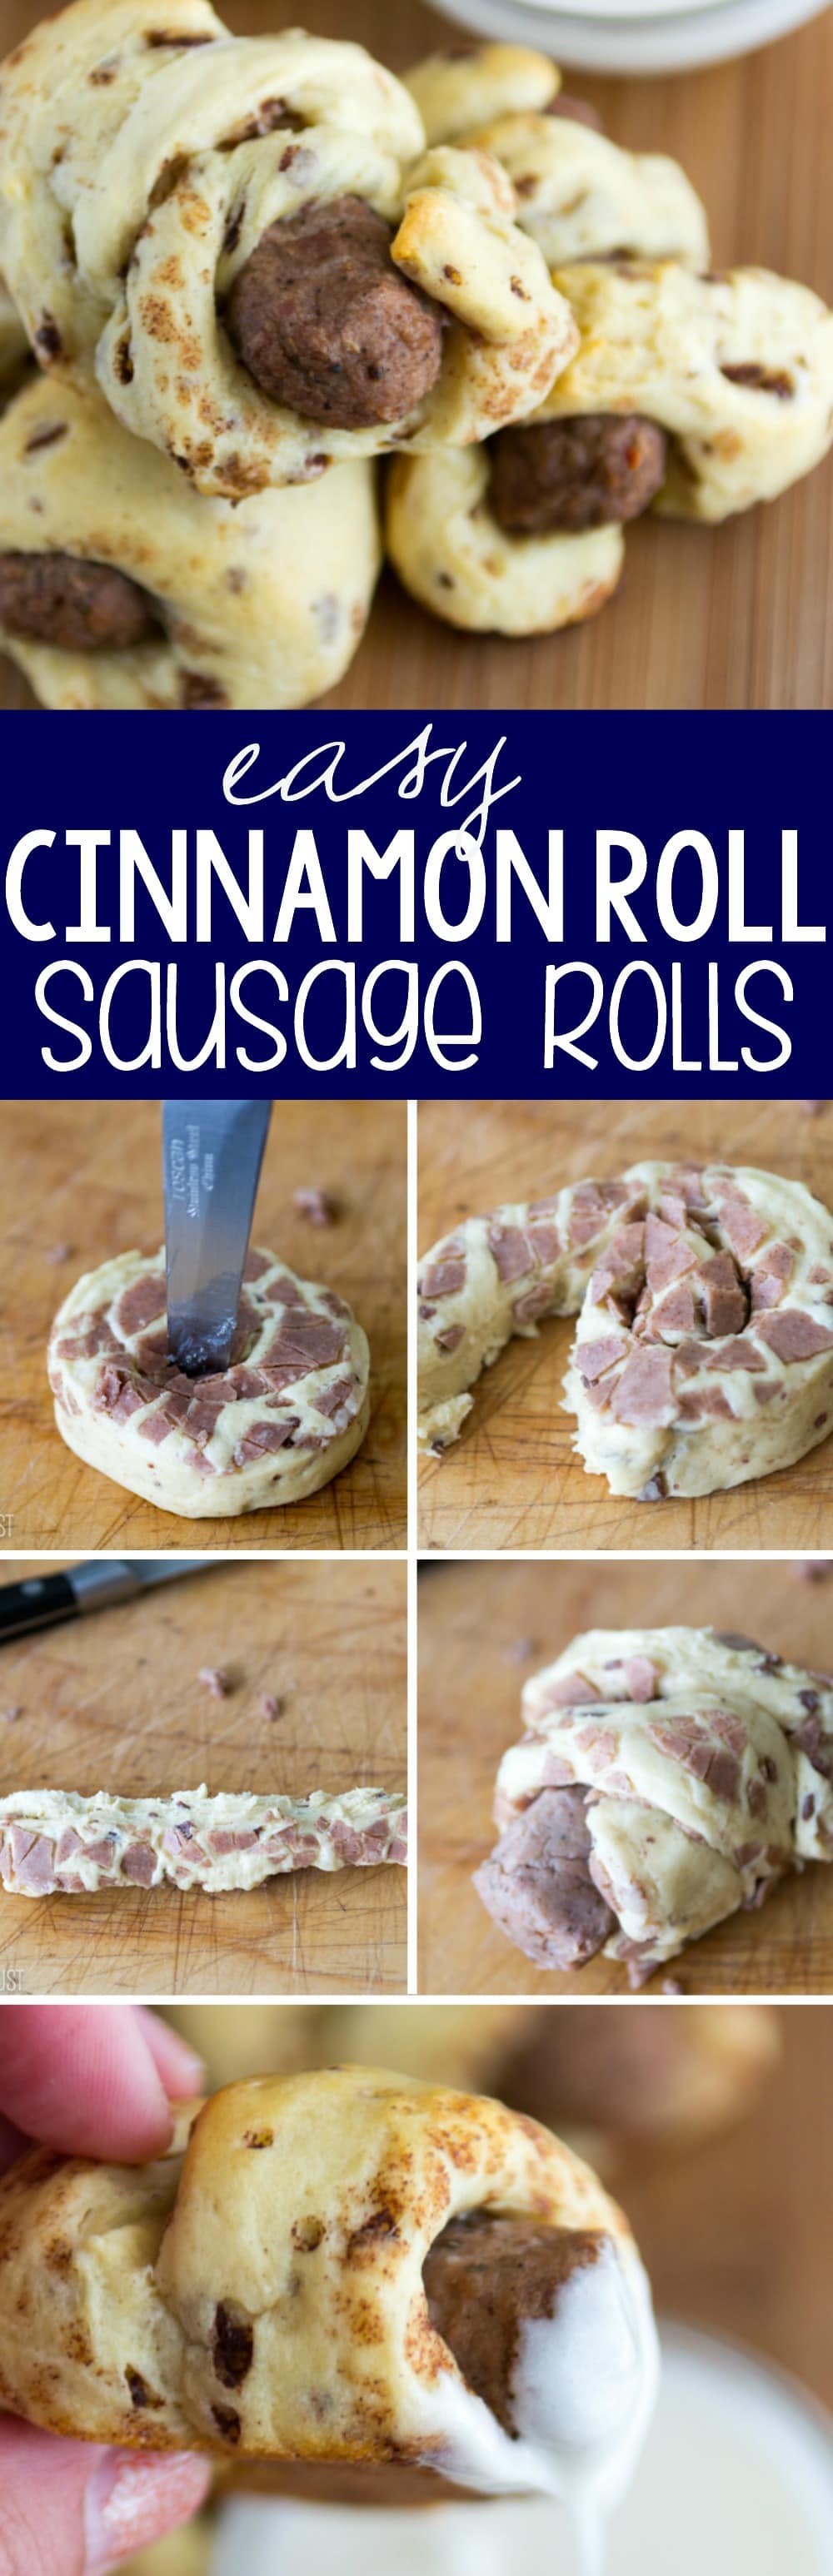 EASY Cinnamon Roll Sausage Rolls collage 